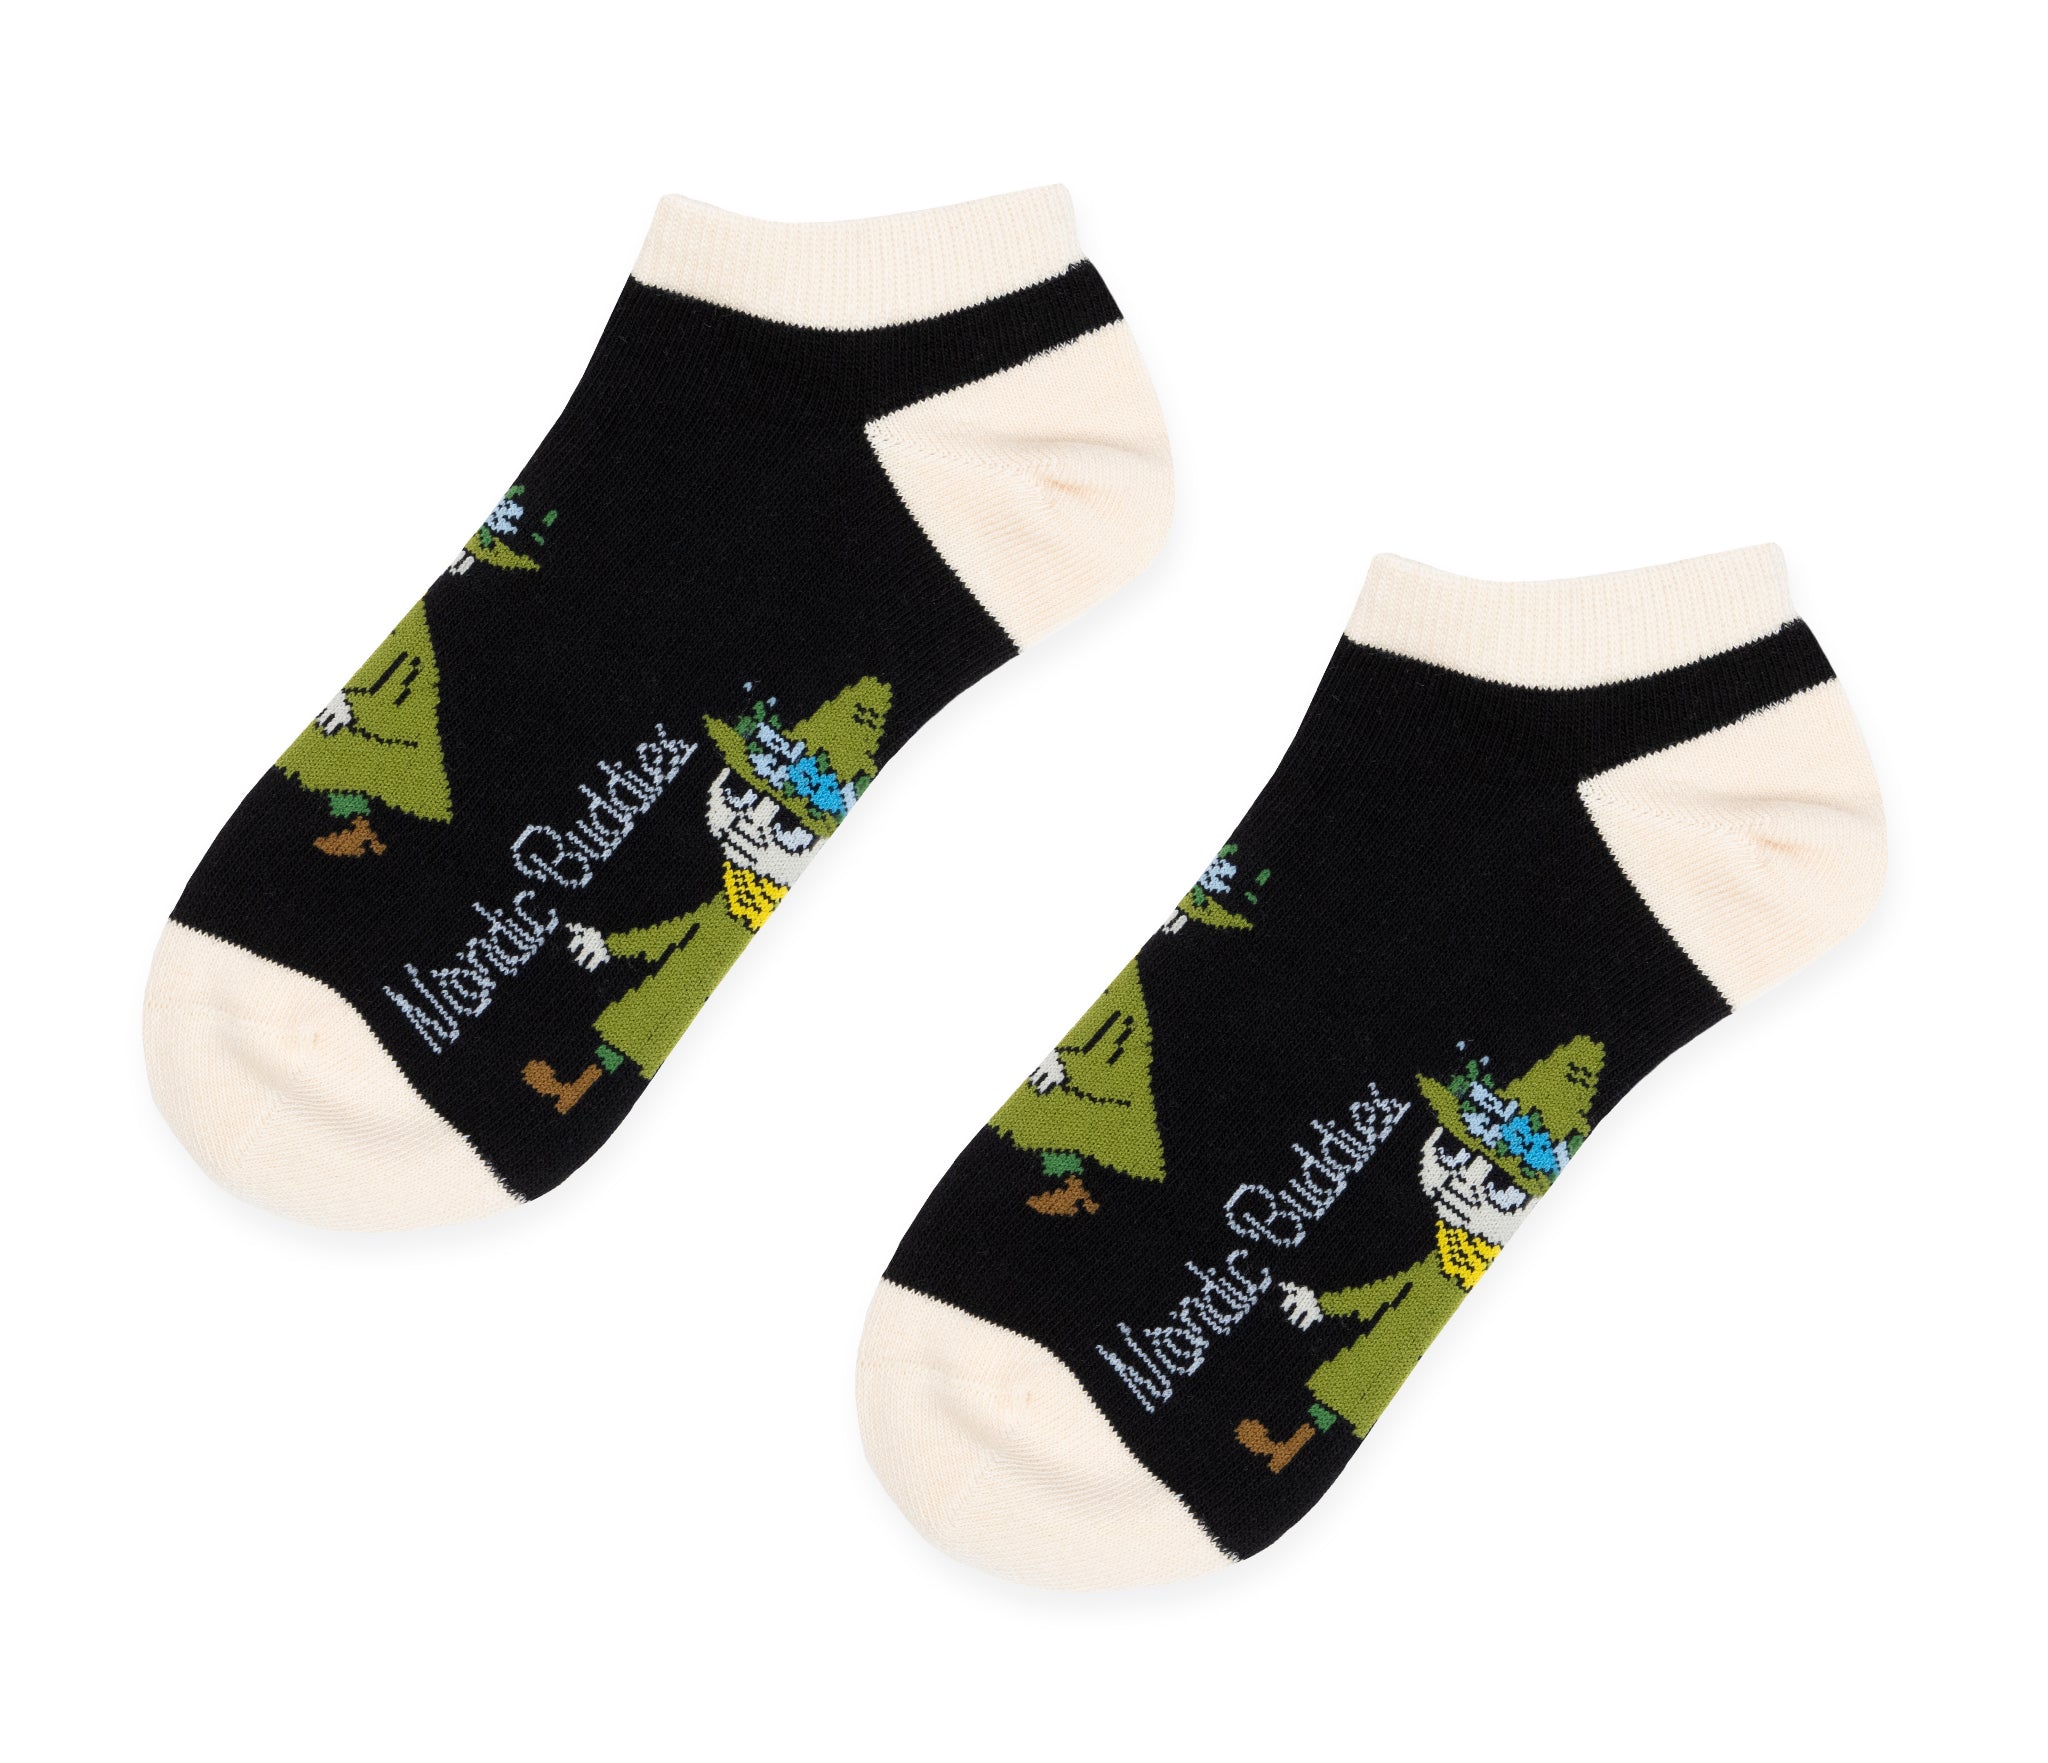 Snufkin Ladies Ankle Socks - Black and Beige